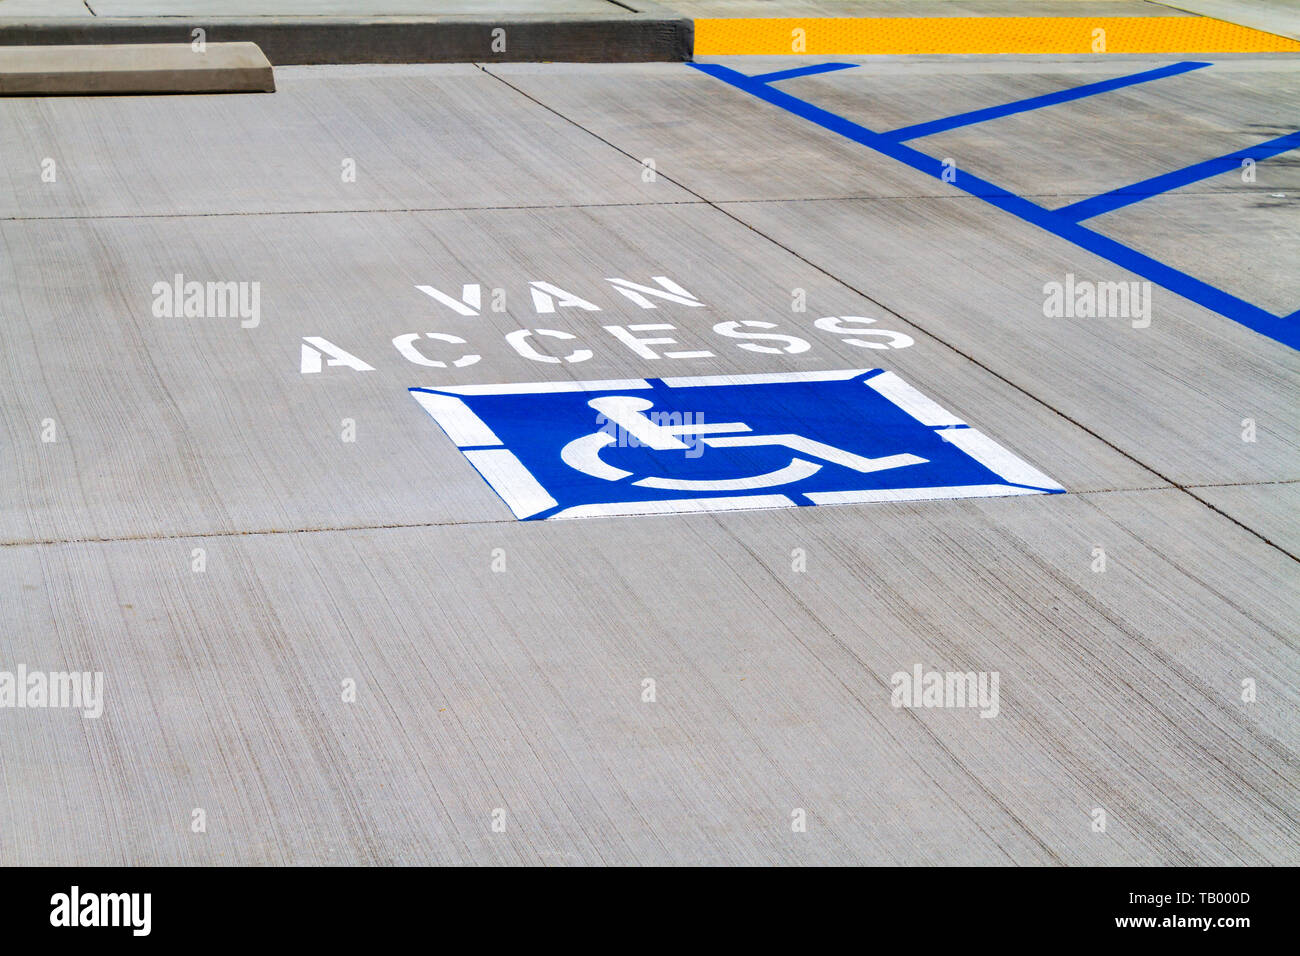 Van Access Handicap Parking Spot Stock Photo